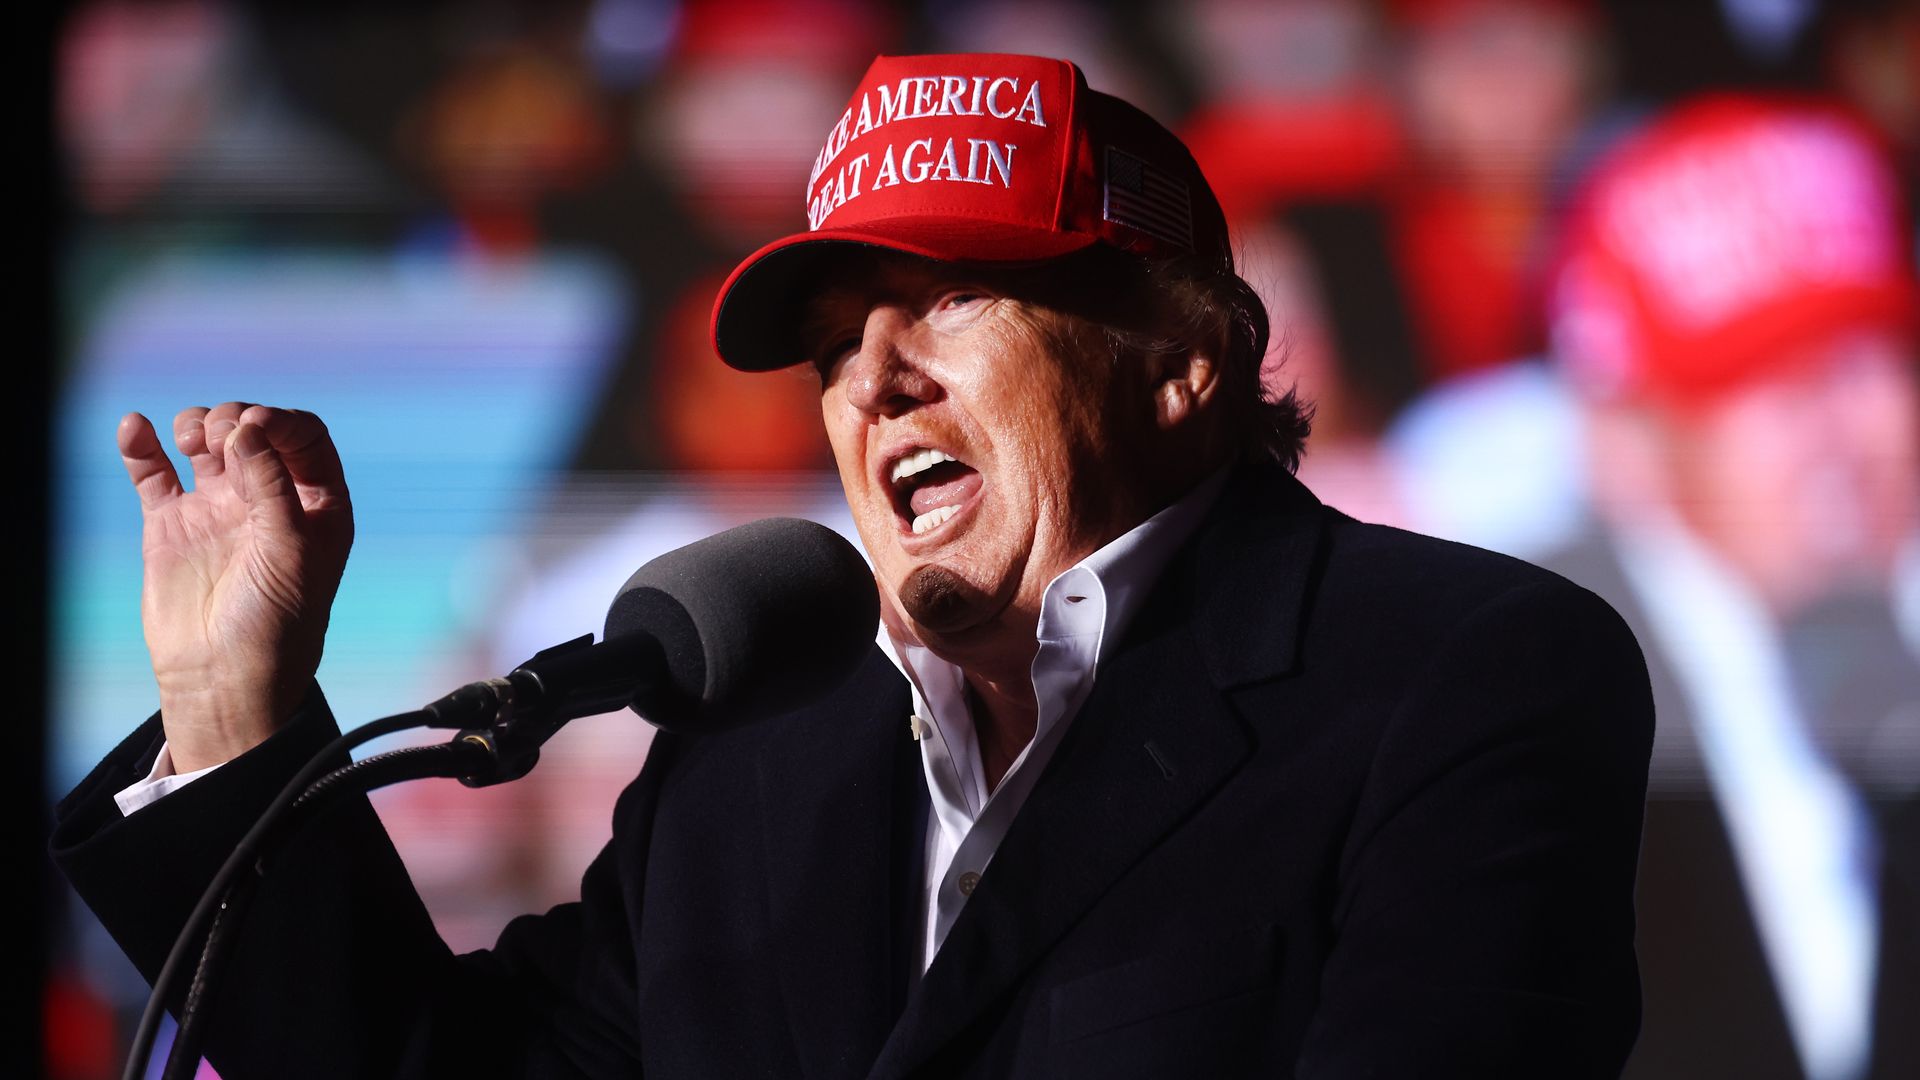 Donald Trump in a MAGA hat